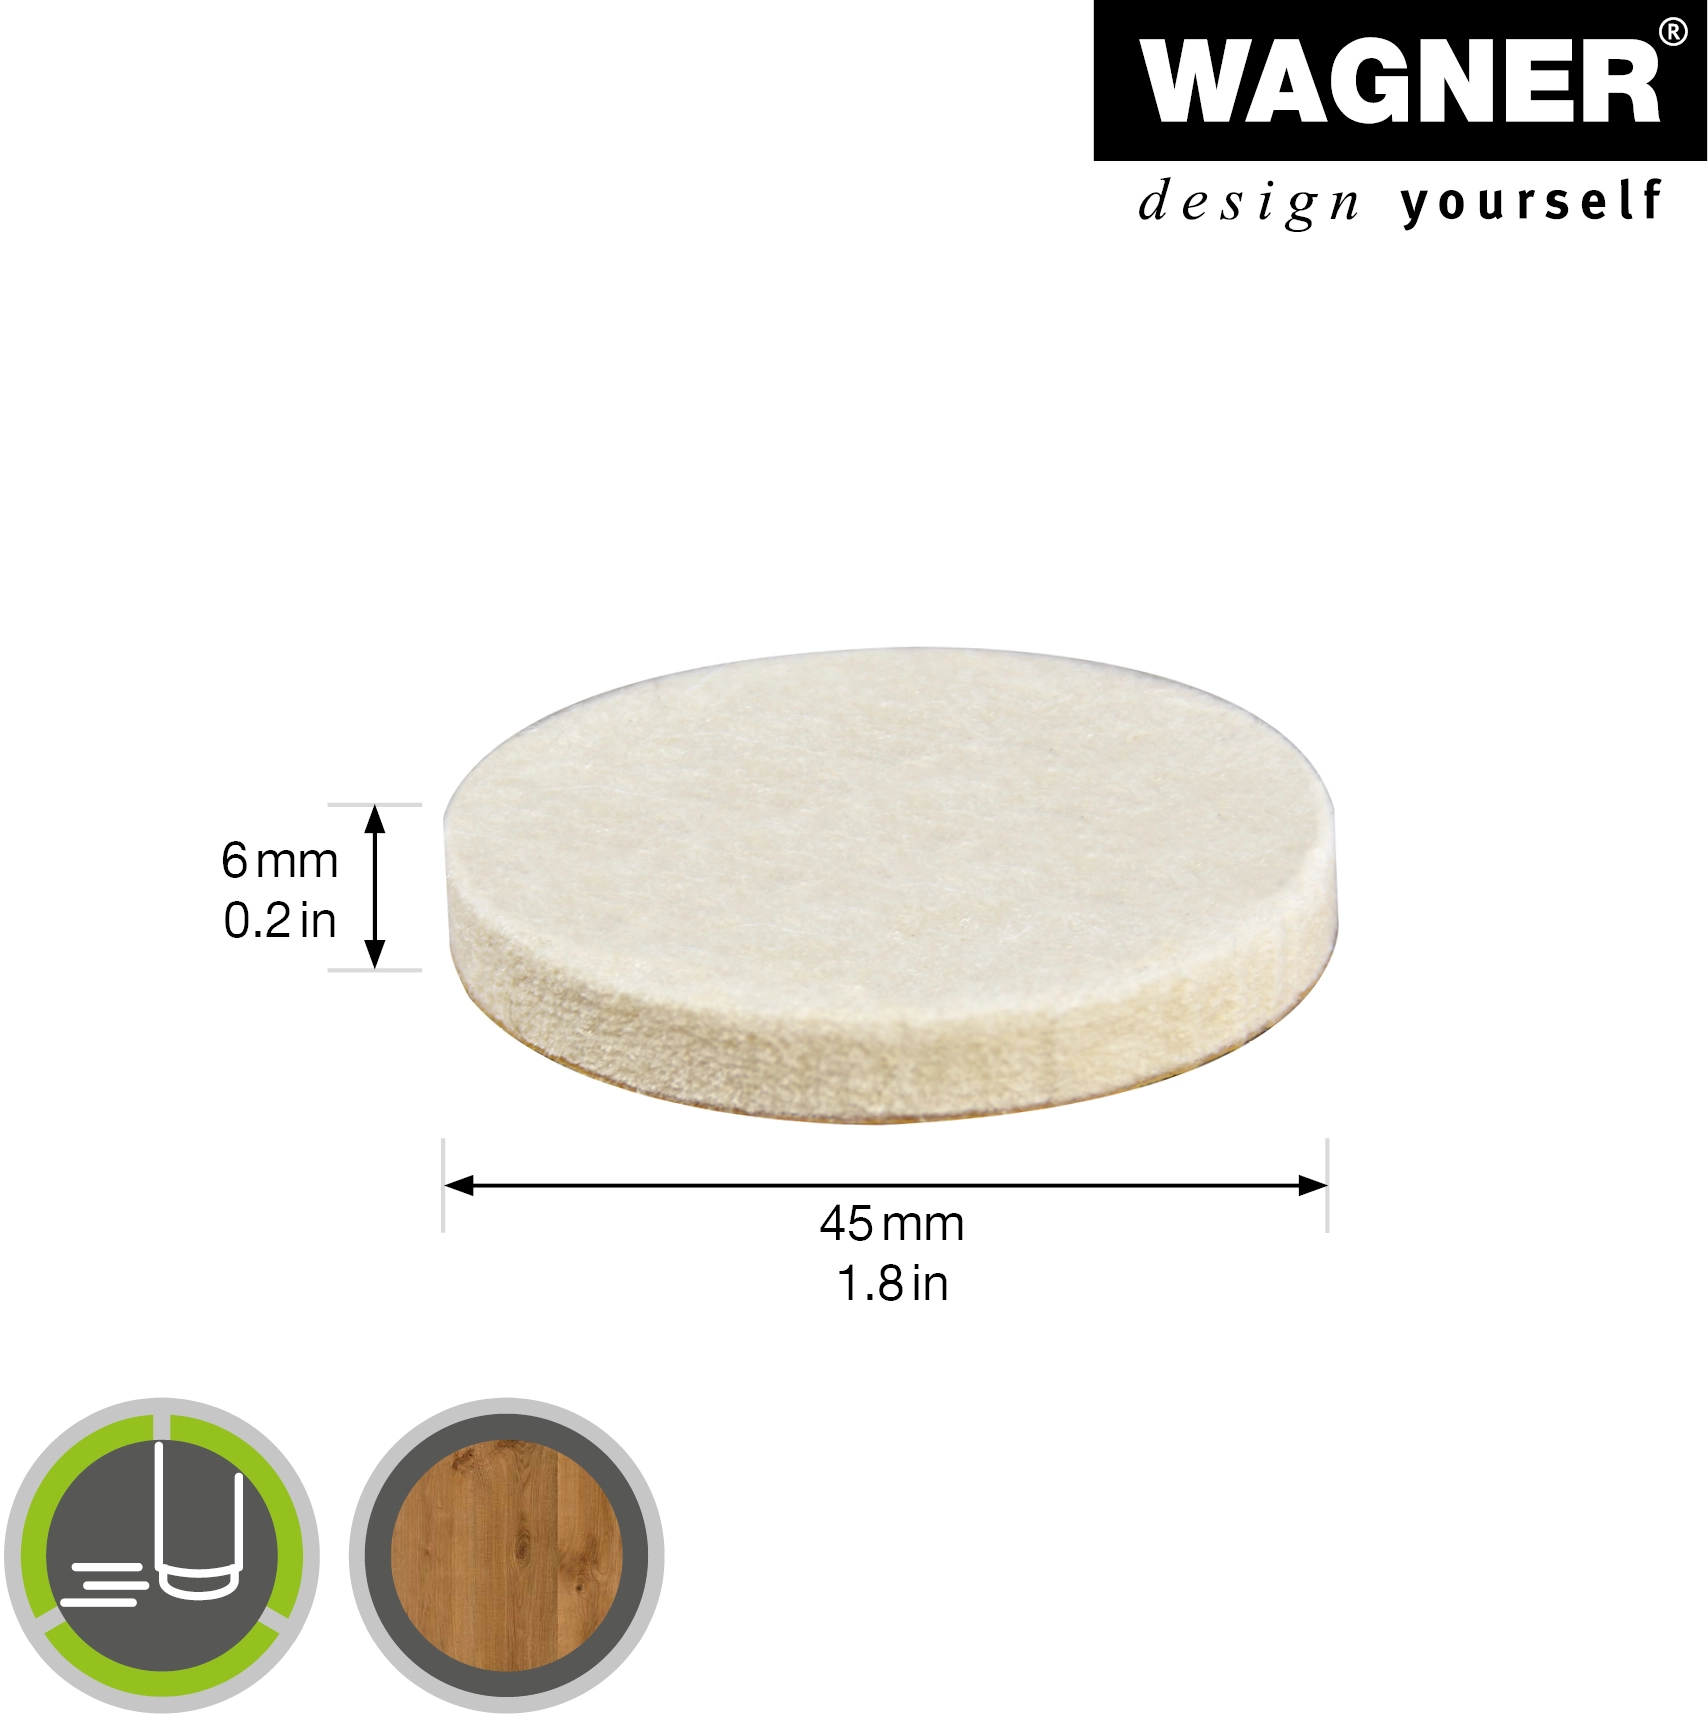 Wagner Filz Soft Selbstklebend Weiß Ø 45 mm x 60 mm 4 Stück kaufen bei OBI